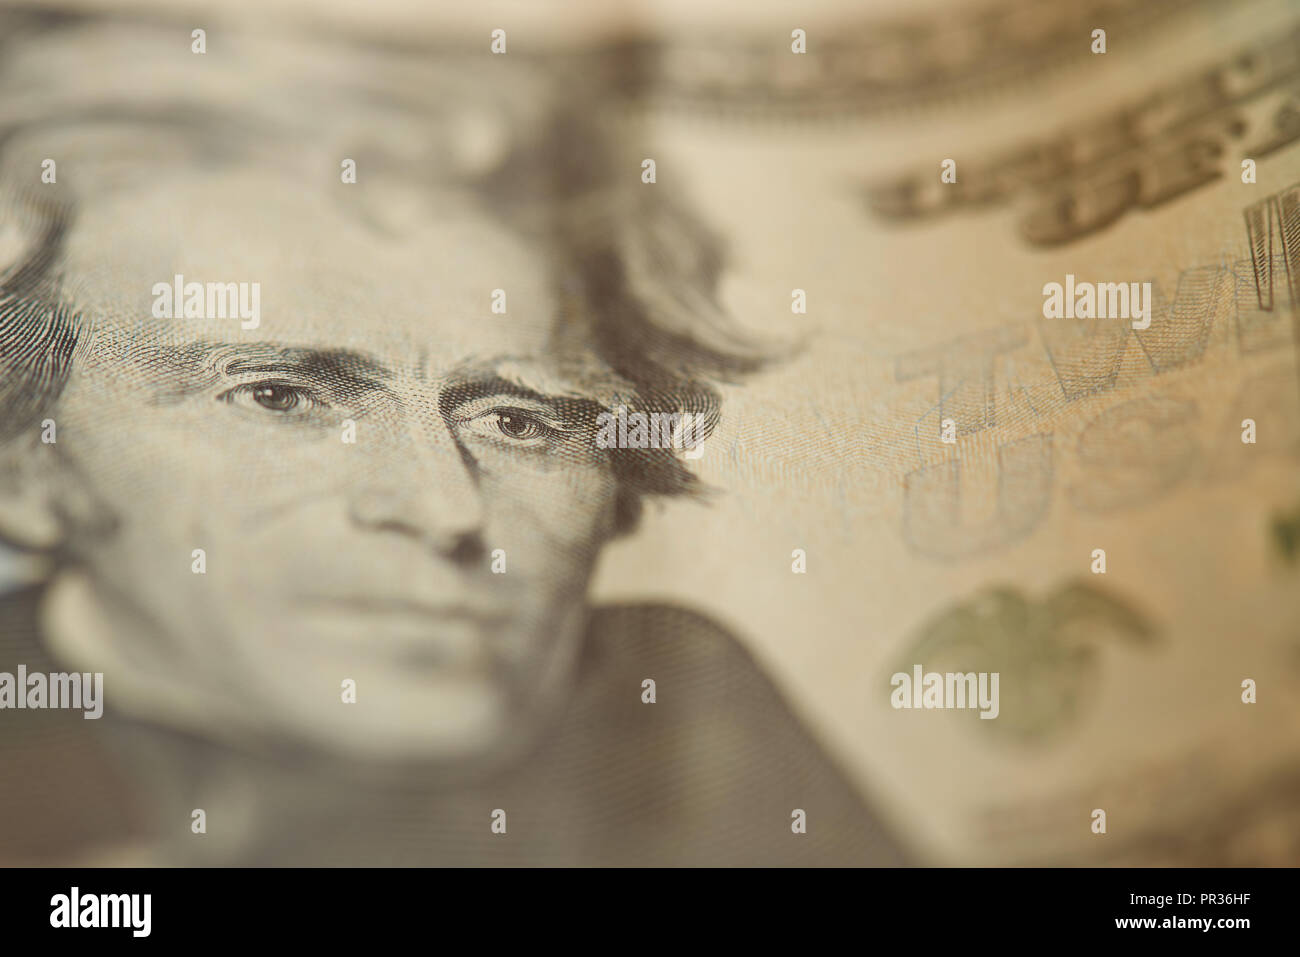 Jackson Präsident Portrait auf Dollar banknote Nähe zu sehen. Stockfoto